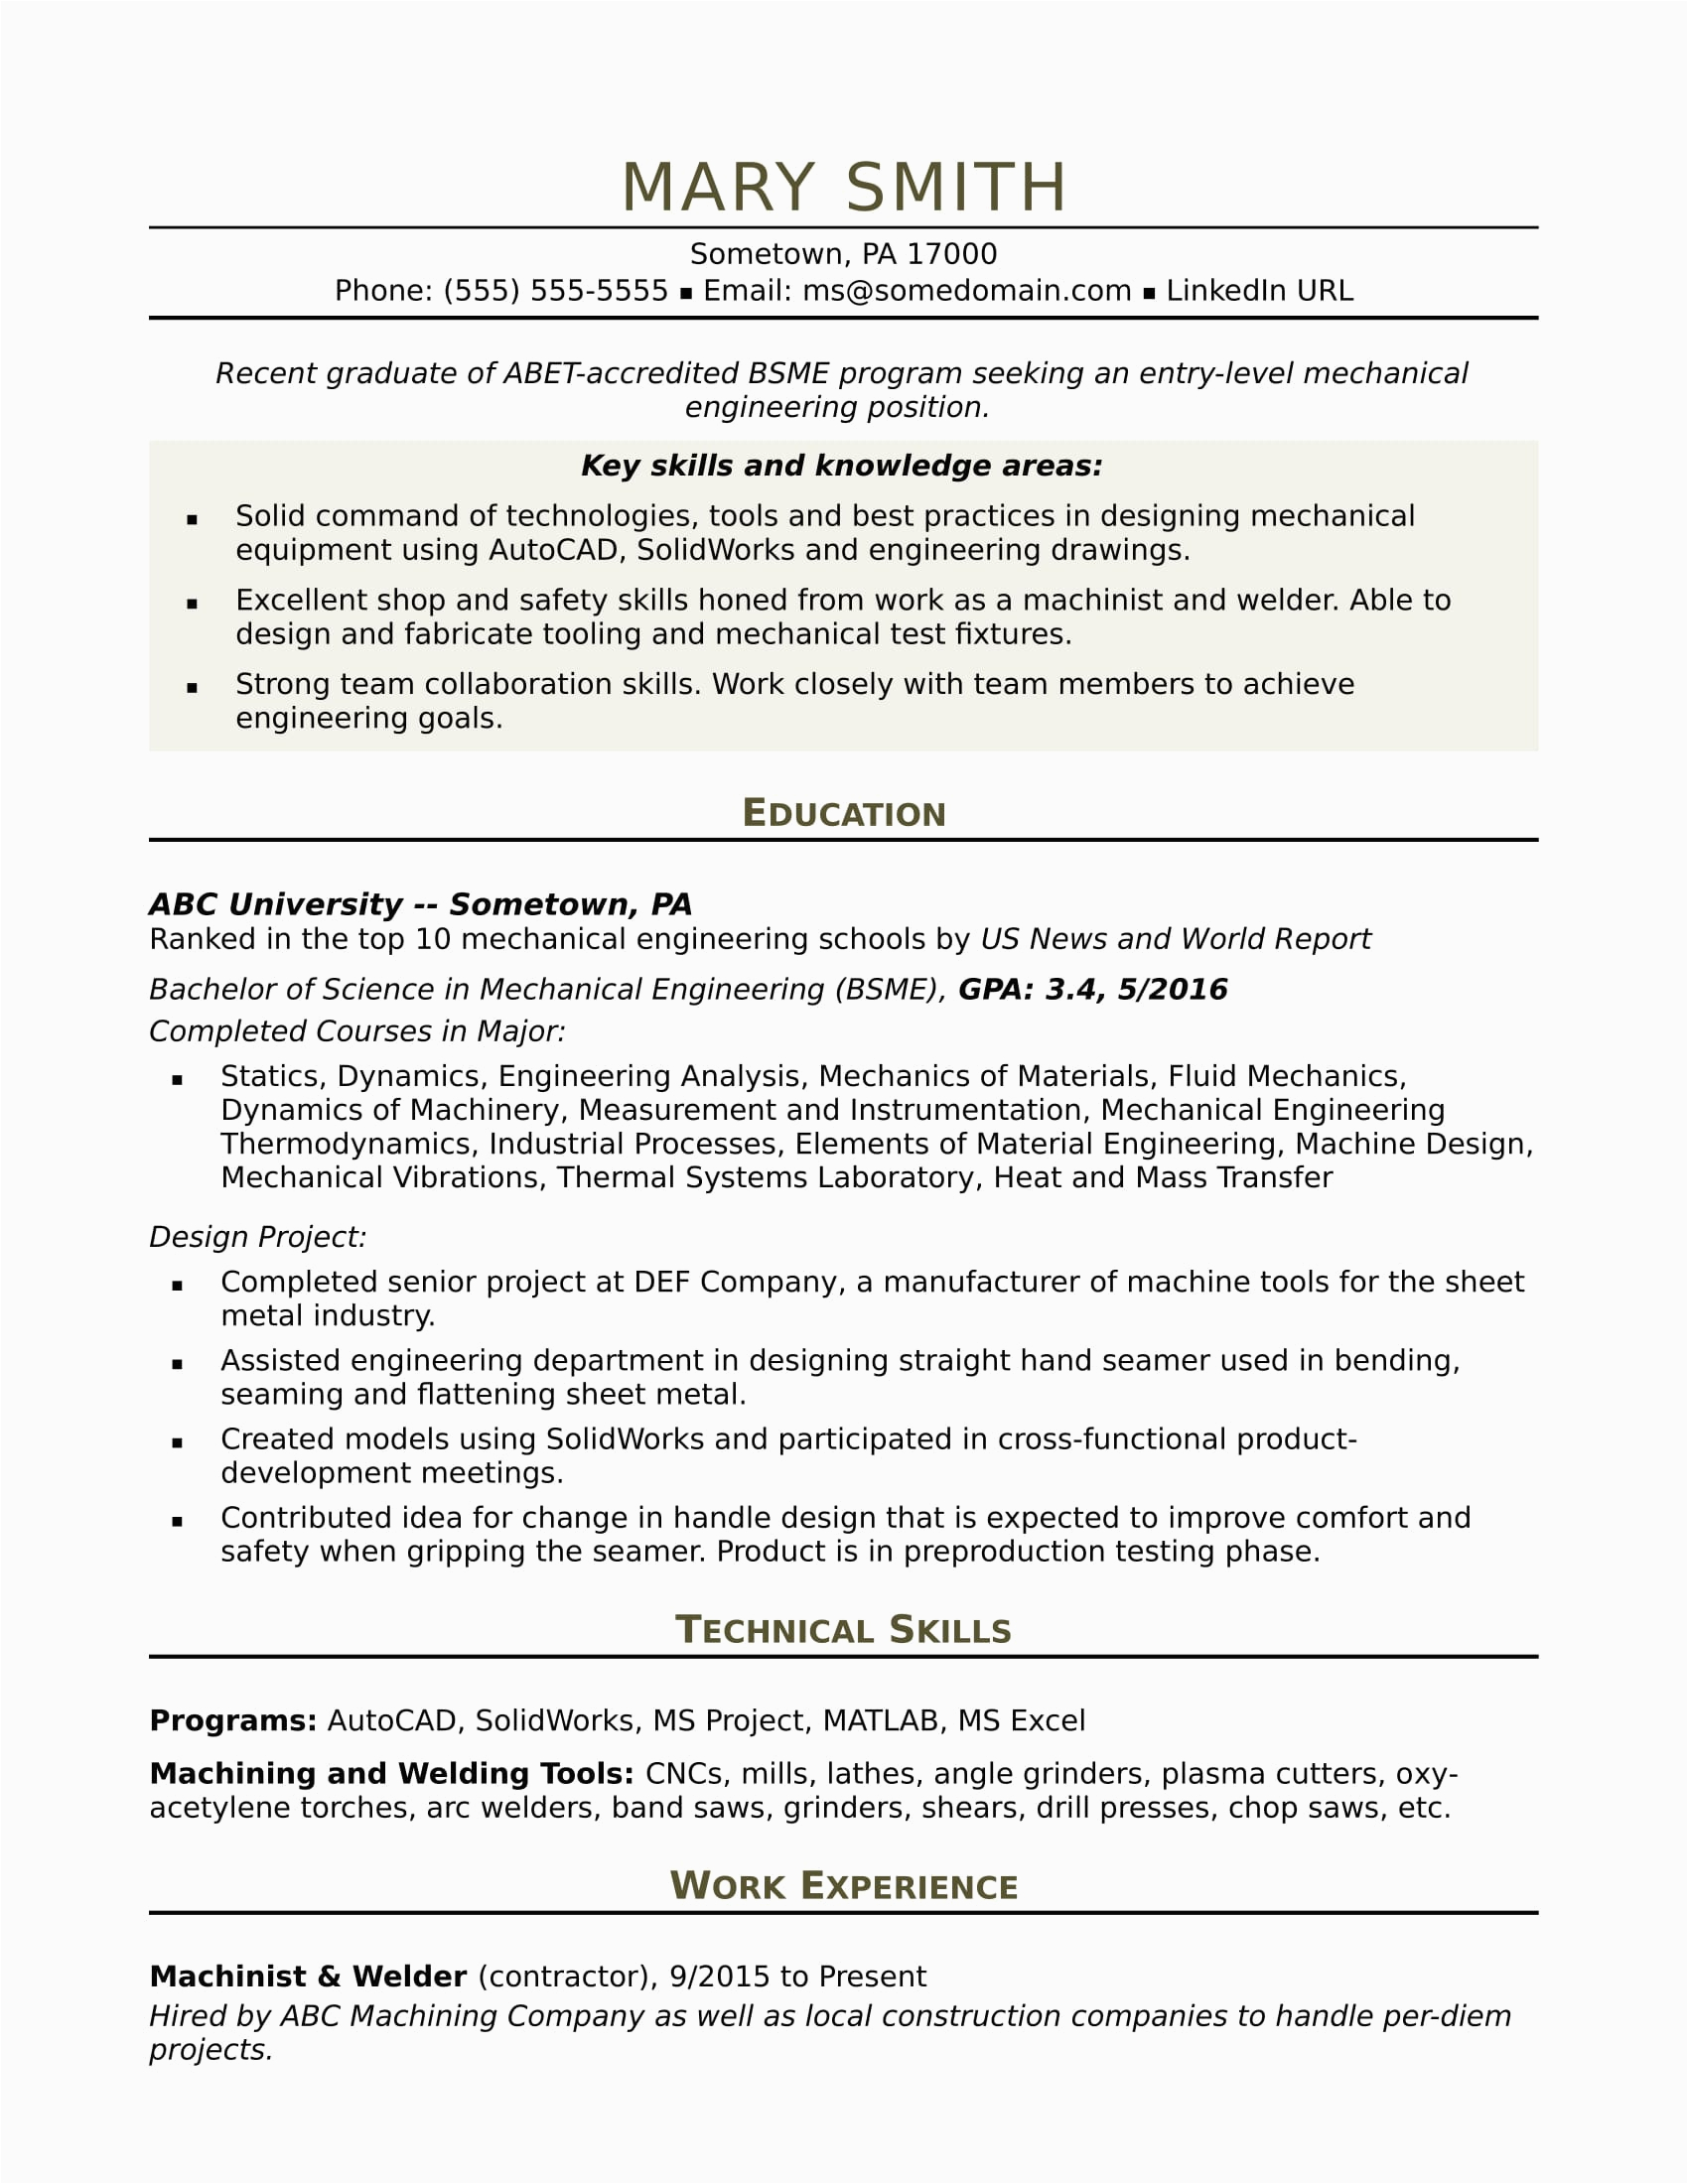 Sample Resume format for Mep Engineer Mechanical Engineer Resume Entry Level